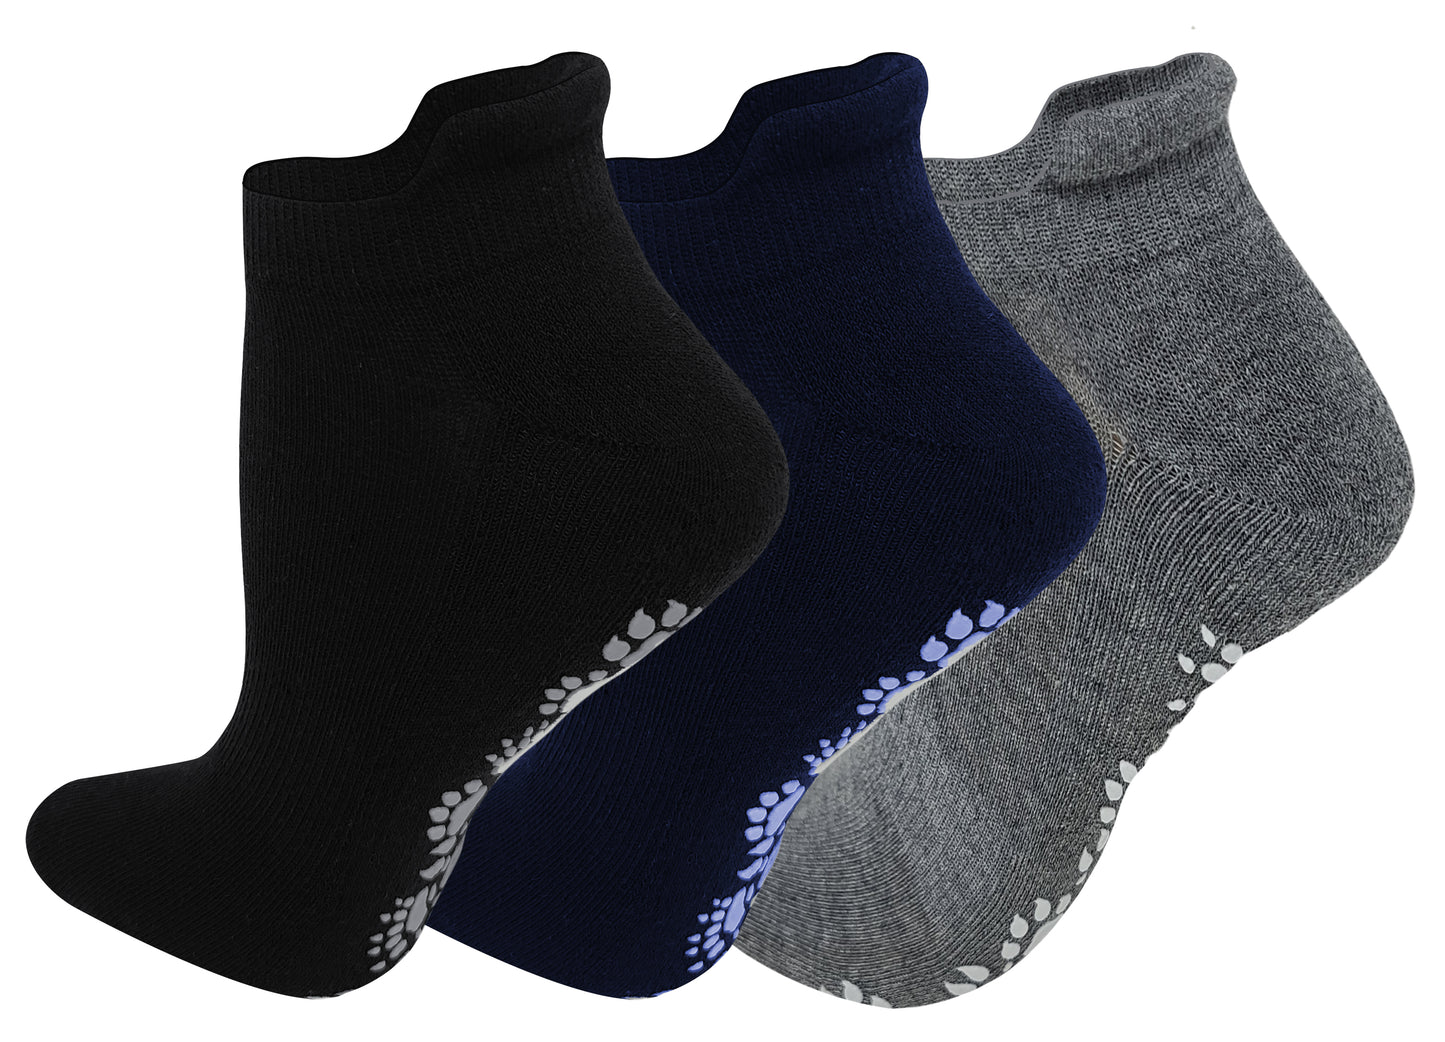 Low Cut Cushion Socks with Grips | Non-Slip Yoga Pilates Ballet | Unisex (3 pairs)